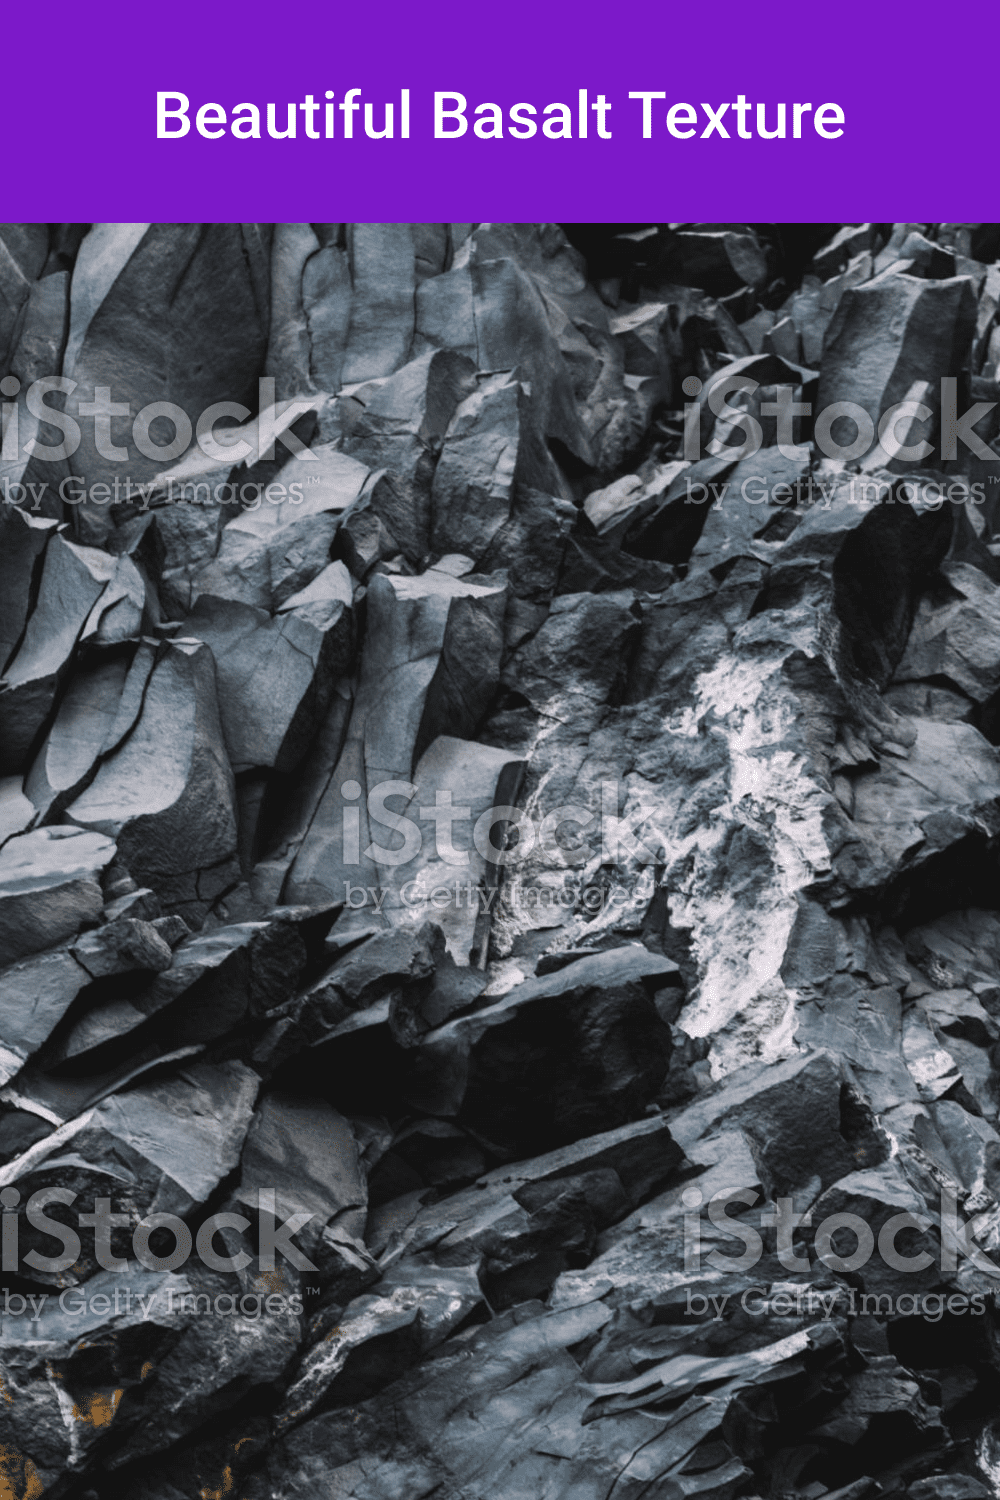 Beautiful basalt texture, Iceland.